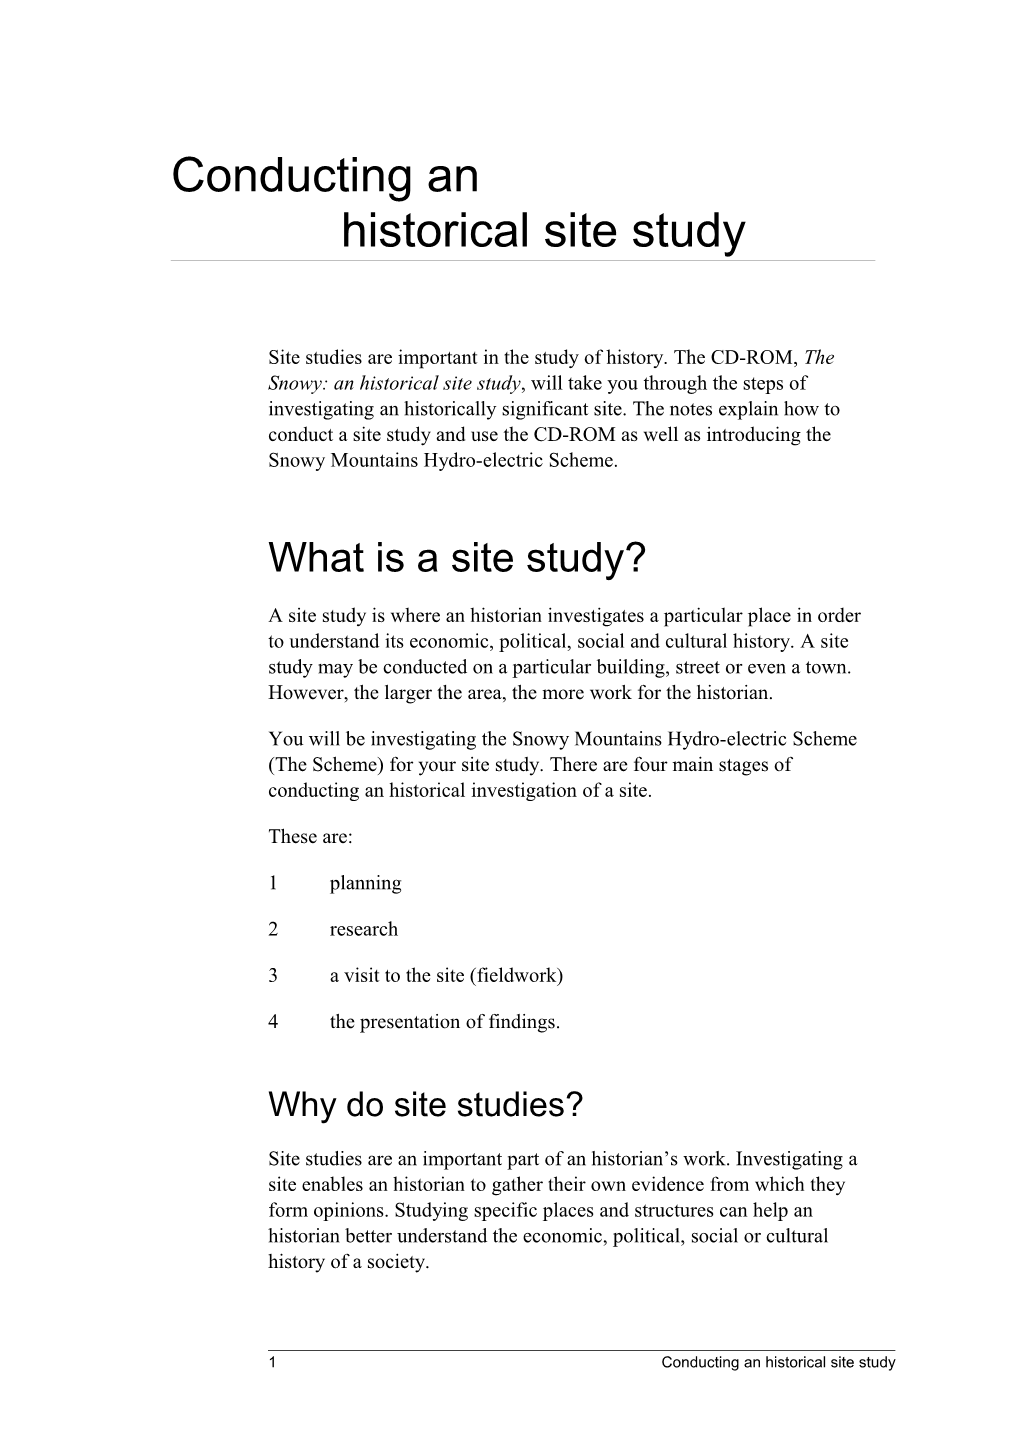 Historical Site Studies